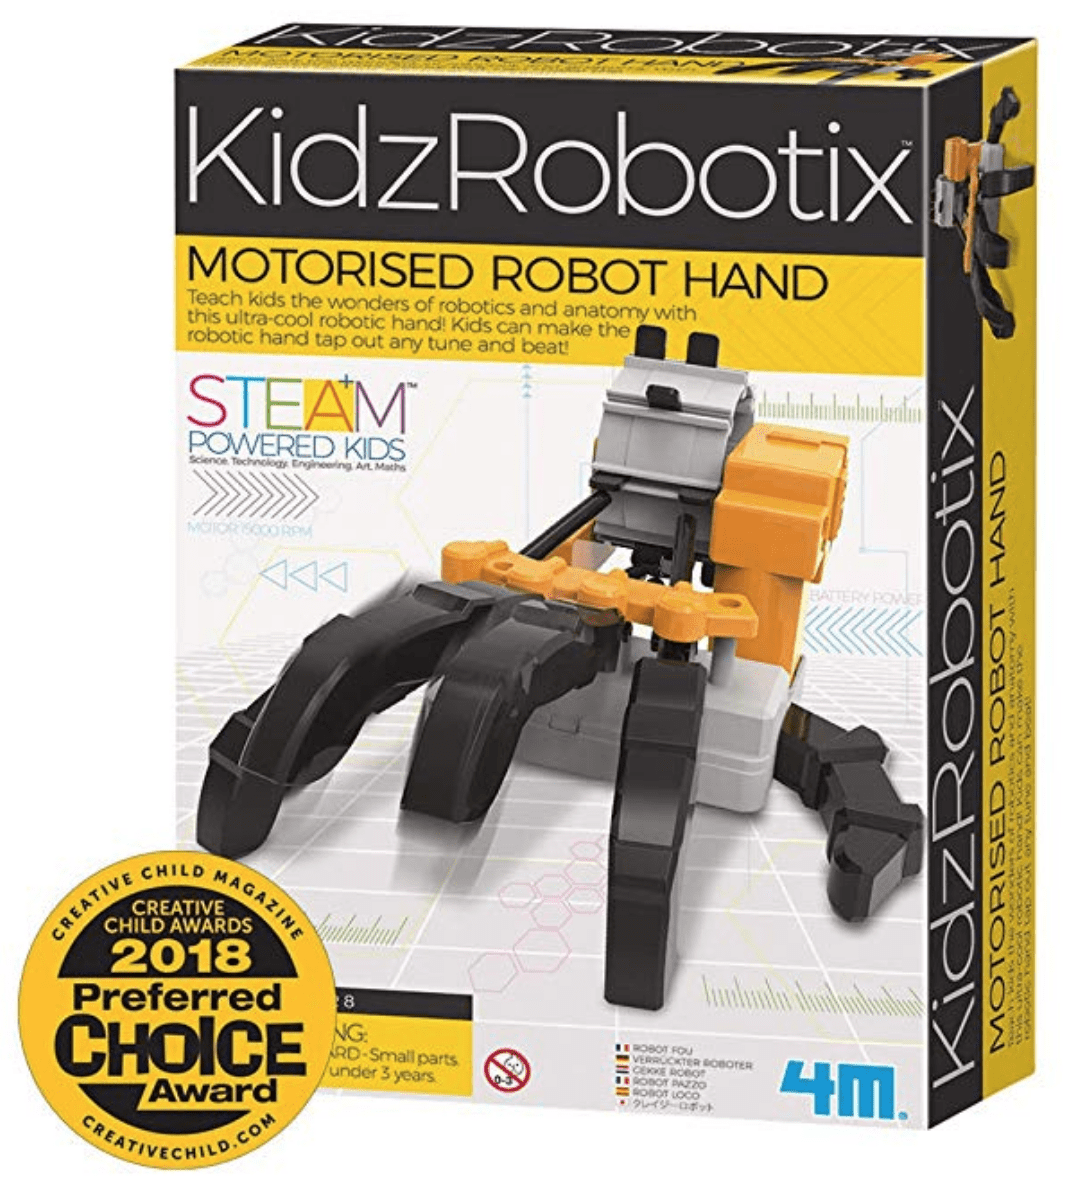 4M Kidzrobotix Spider Robot Kit Steam Powered Kids Educational Ages 8 for sale online